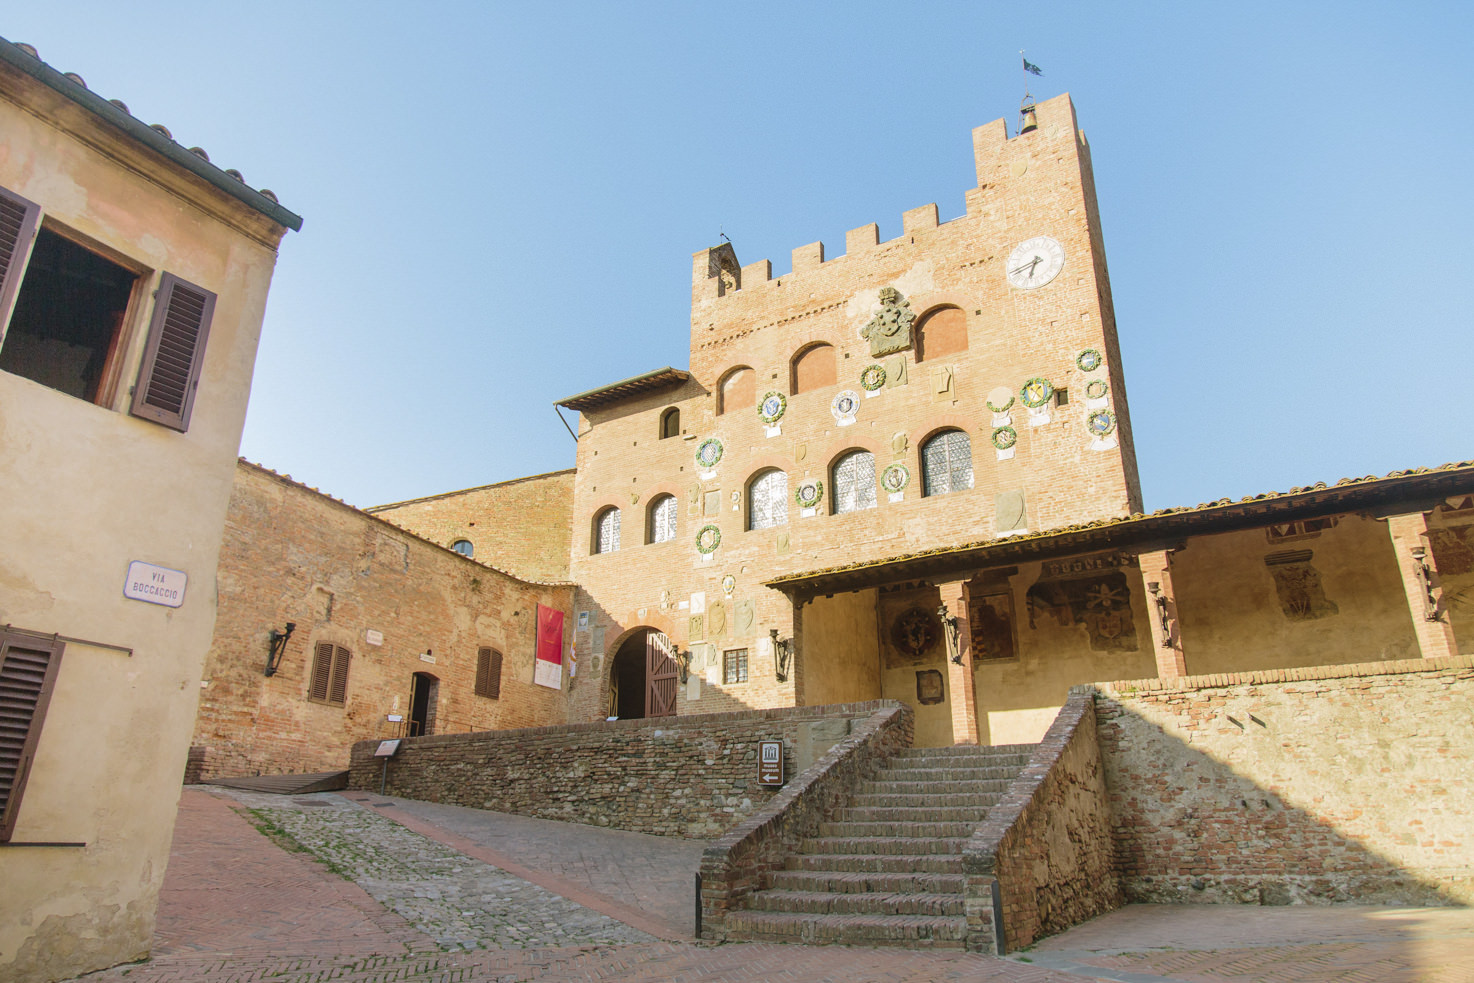 Medieval Town Hall of Certaldo